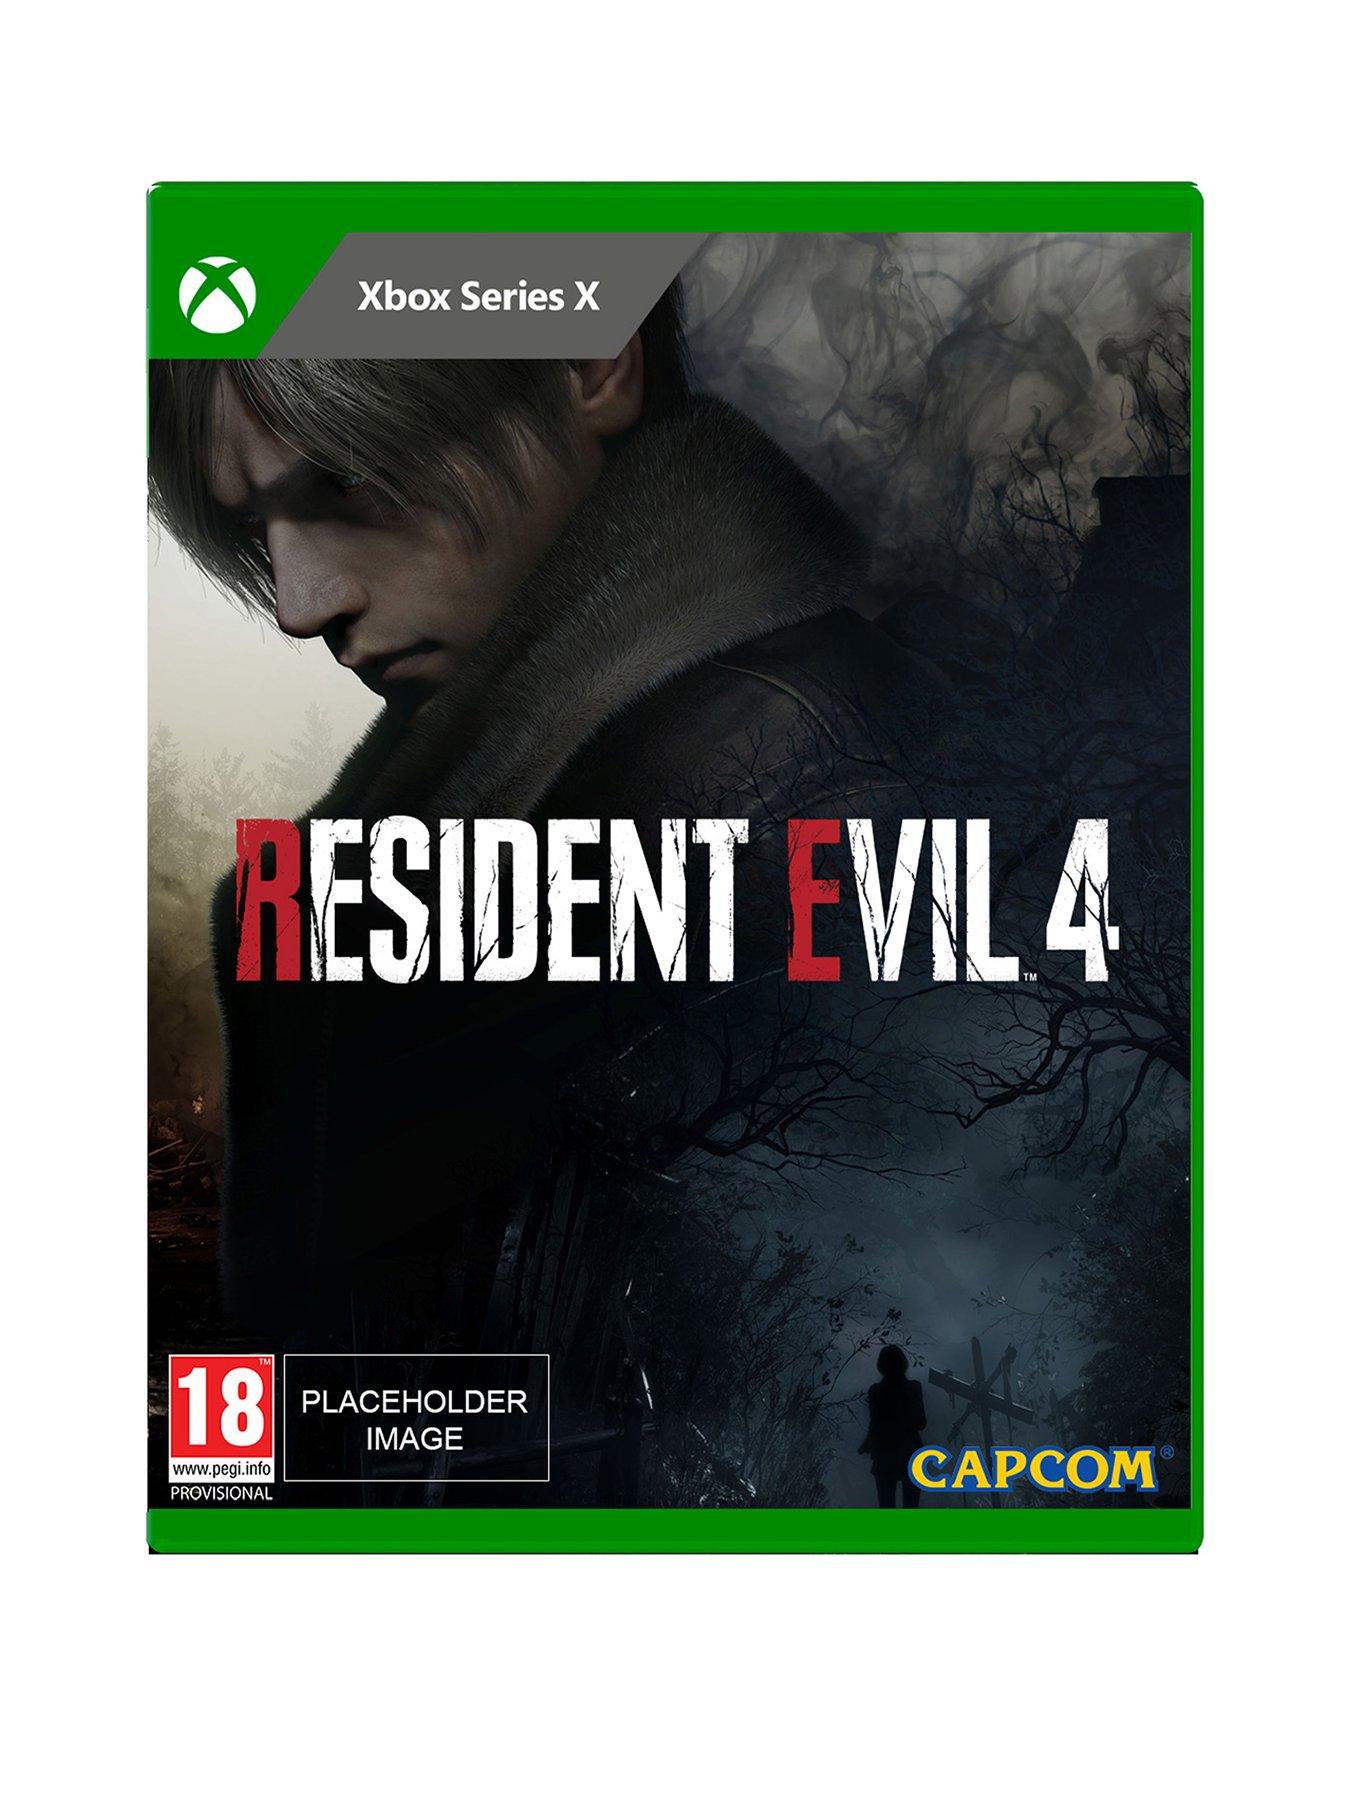 Dead Rising, Capcom Entertainment, Xbox One, [Physical Edition